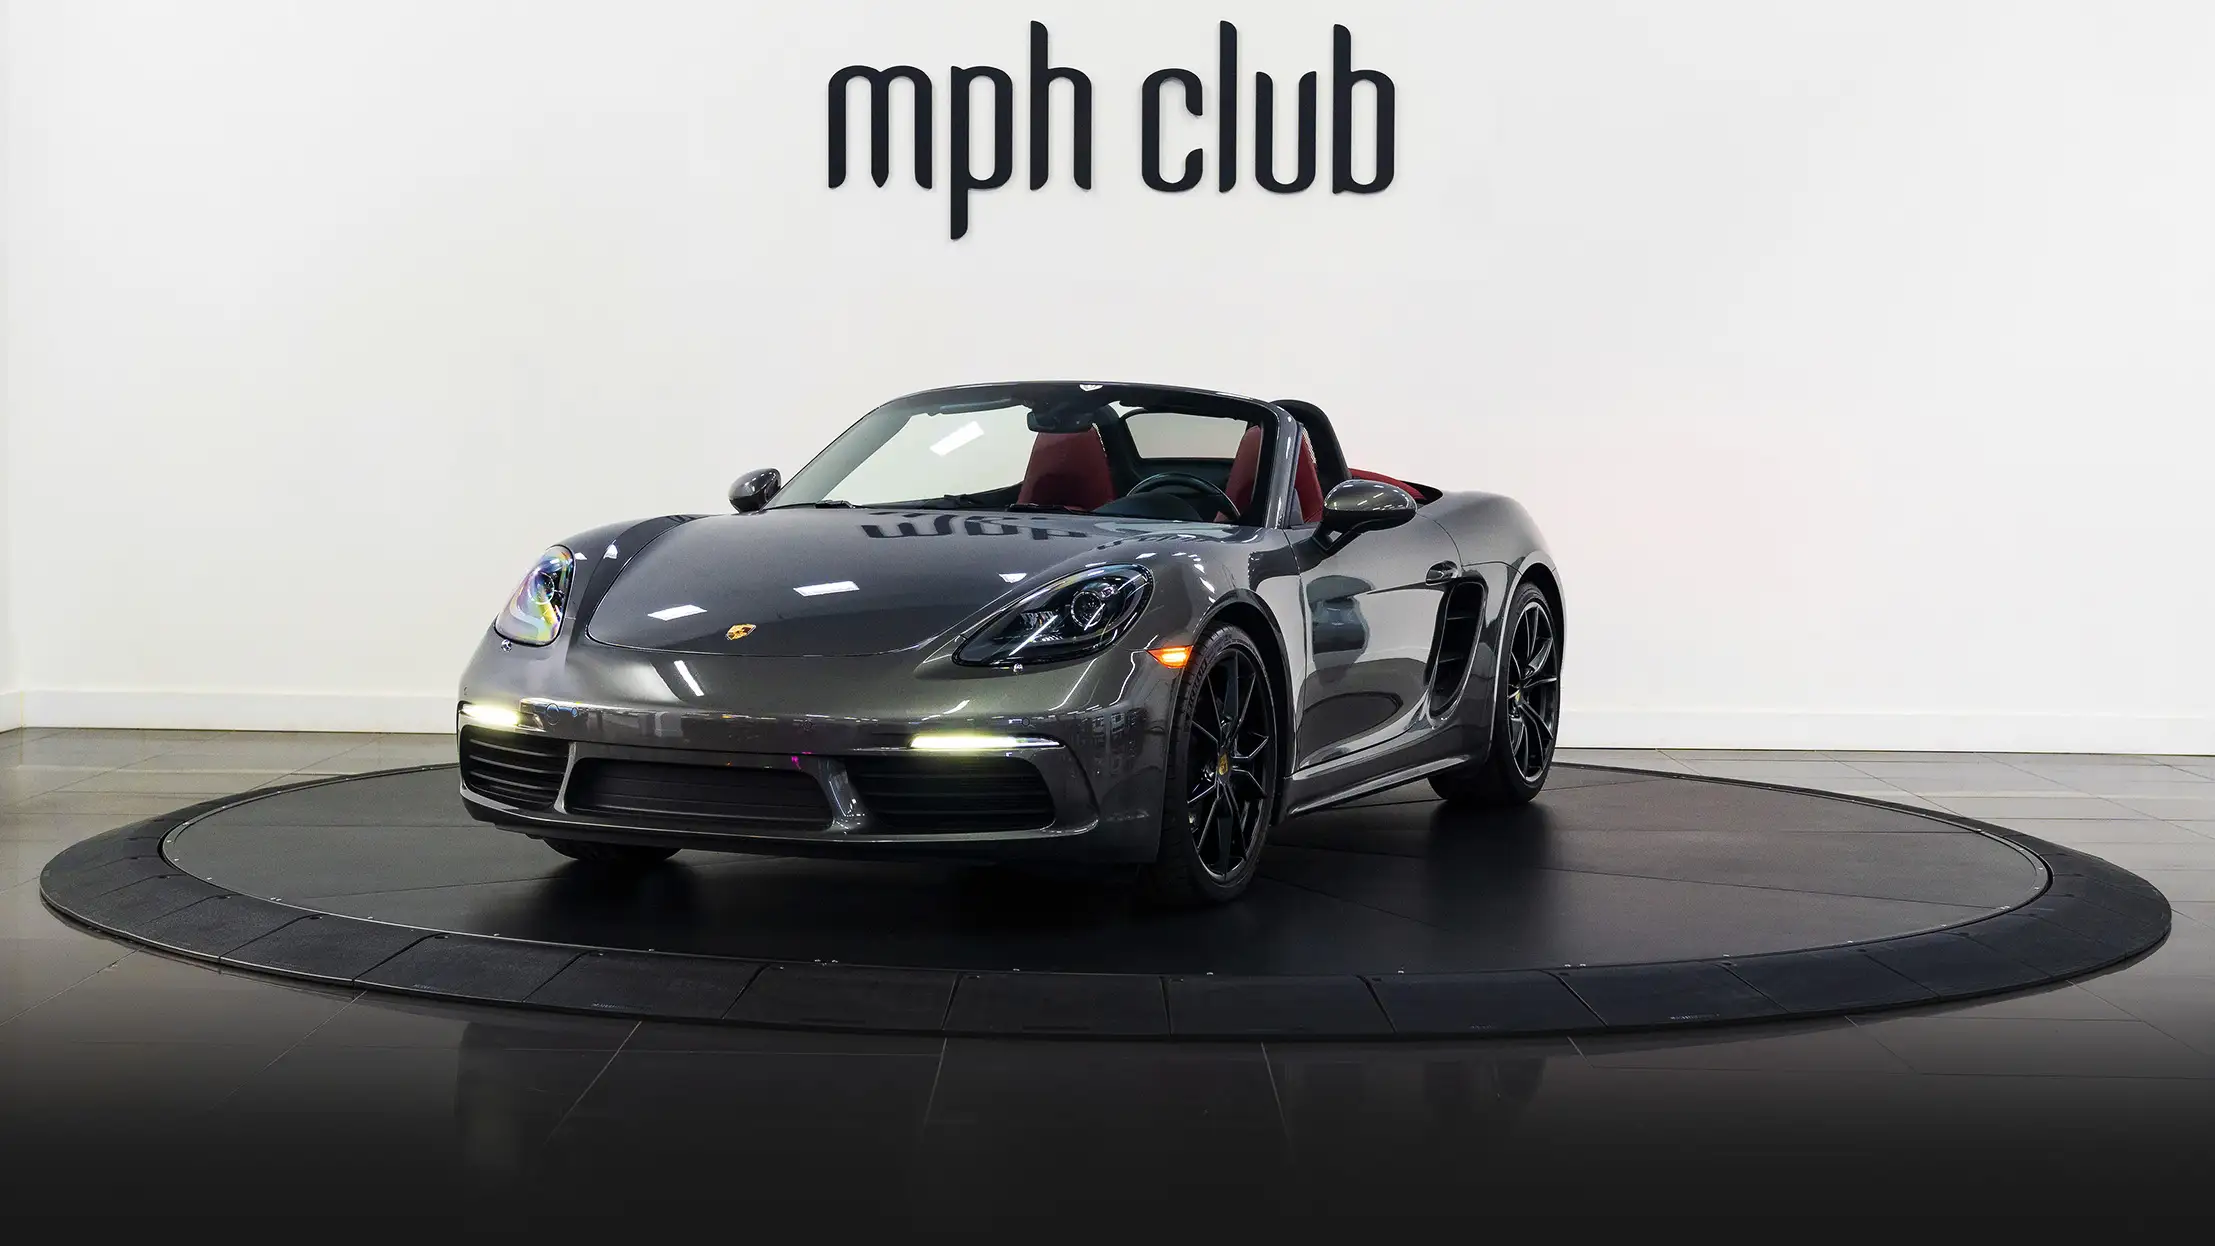 Porsche 718 Boxster rental profile view mph club